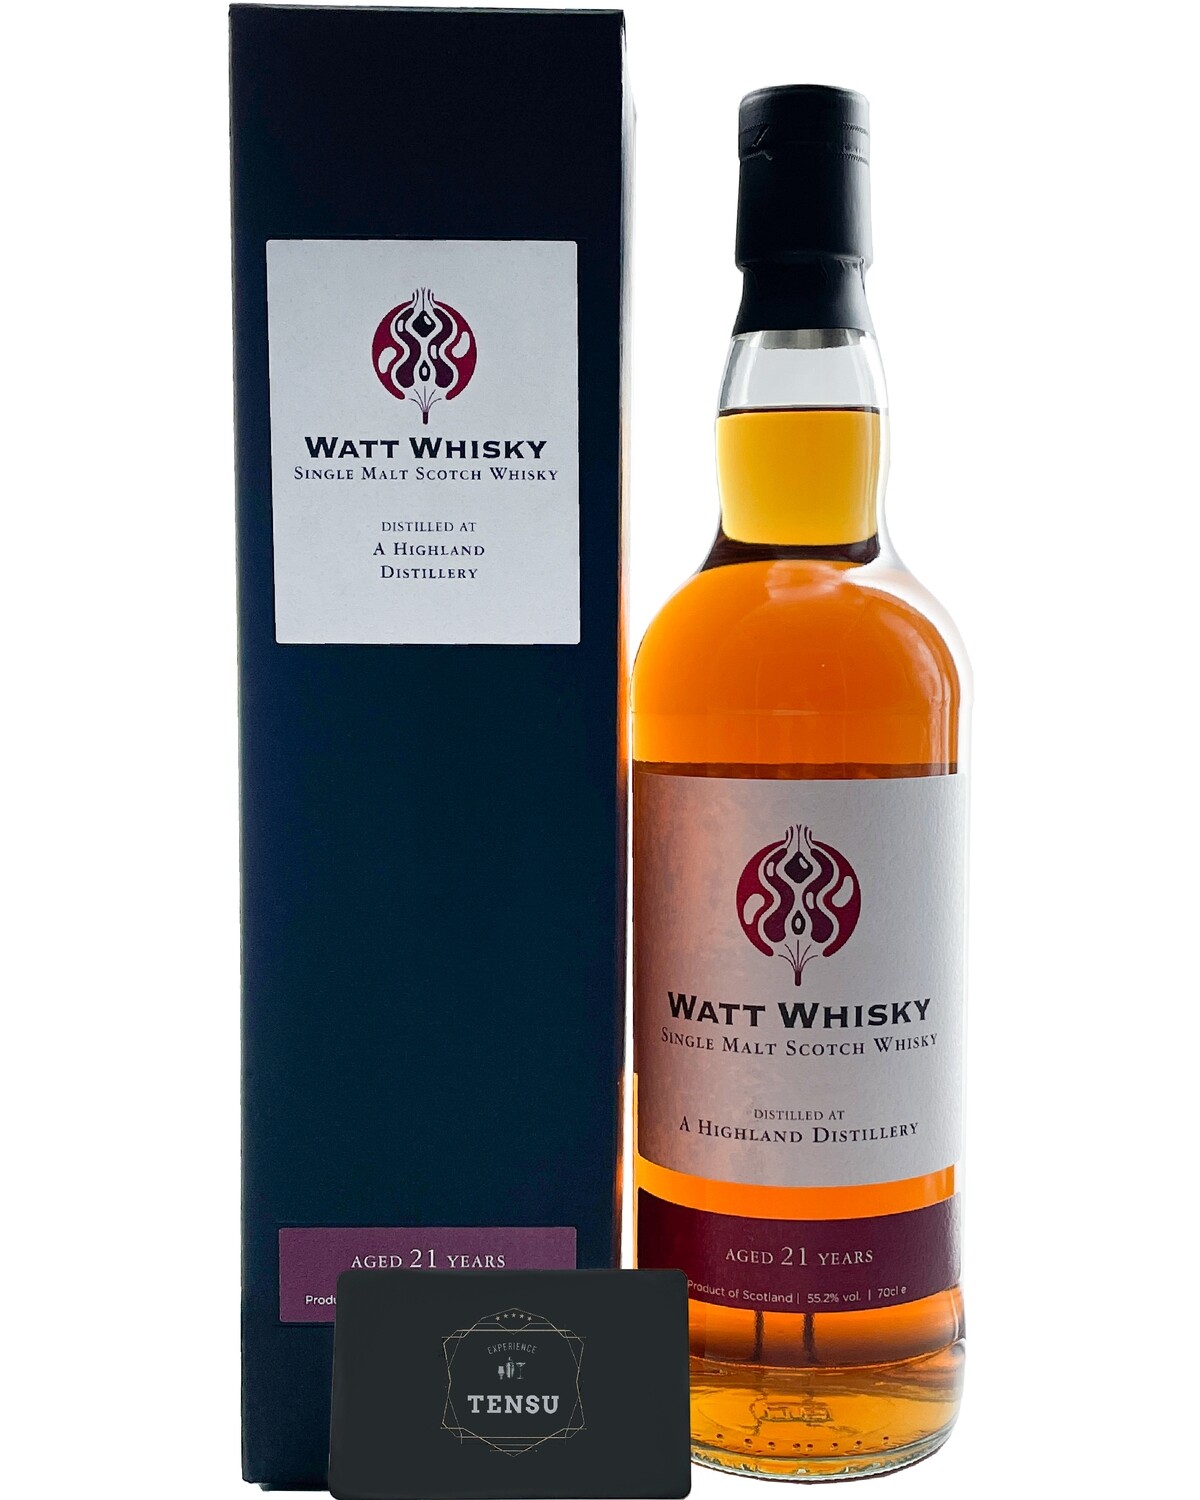 A Highland Distillery 21Y (2000-2022) SC 55,2 "Watt Whisky"